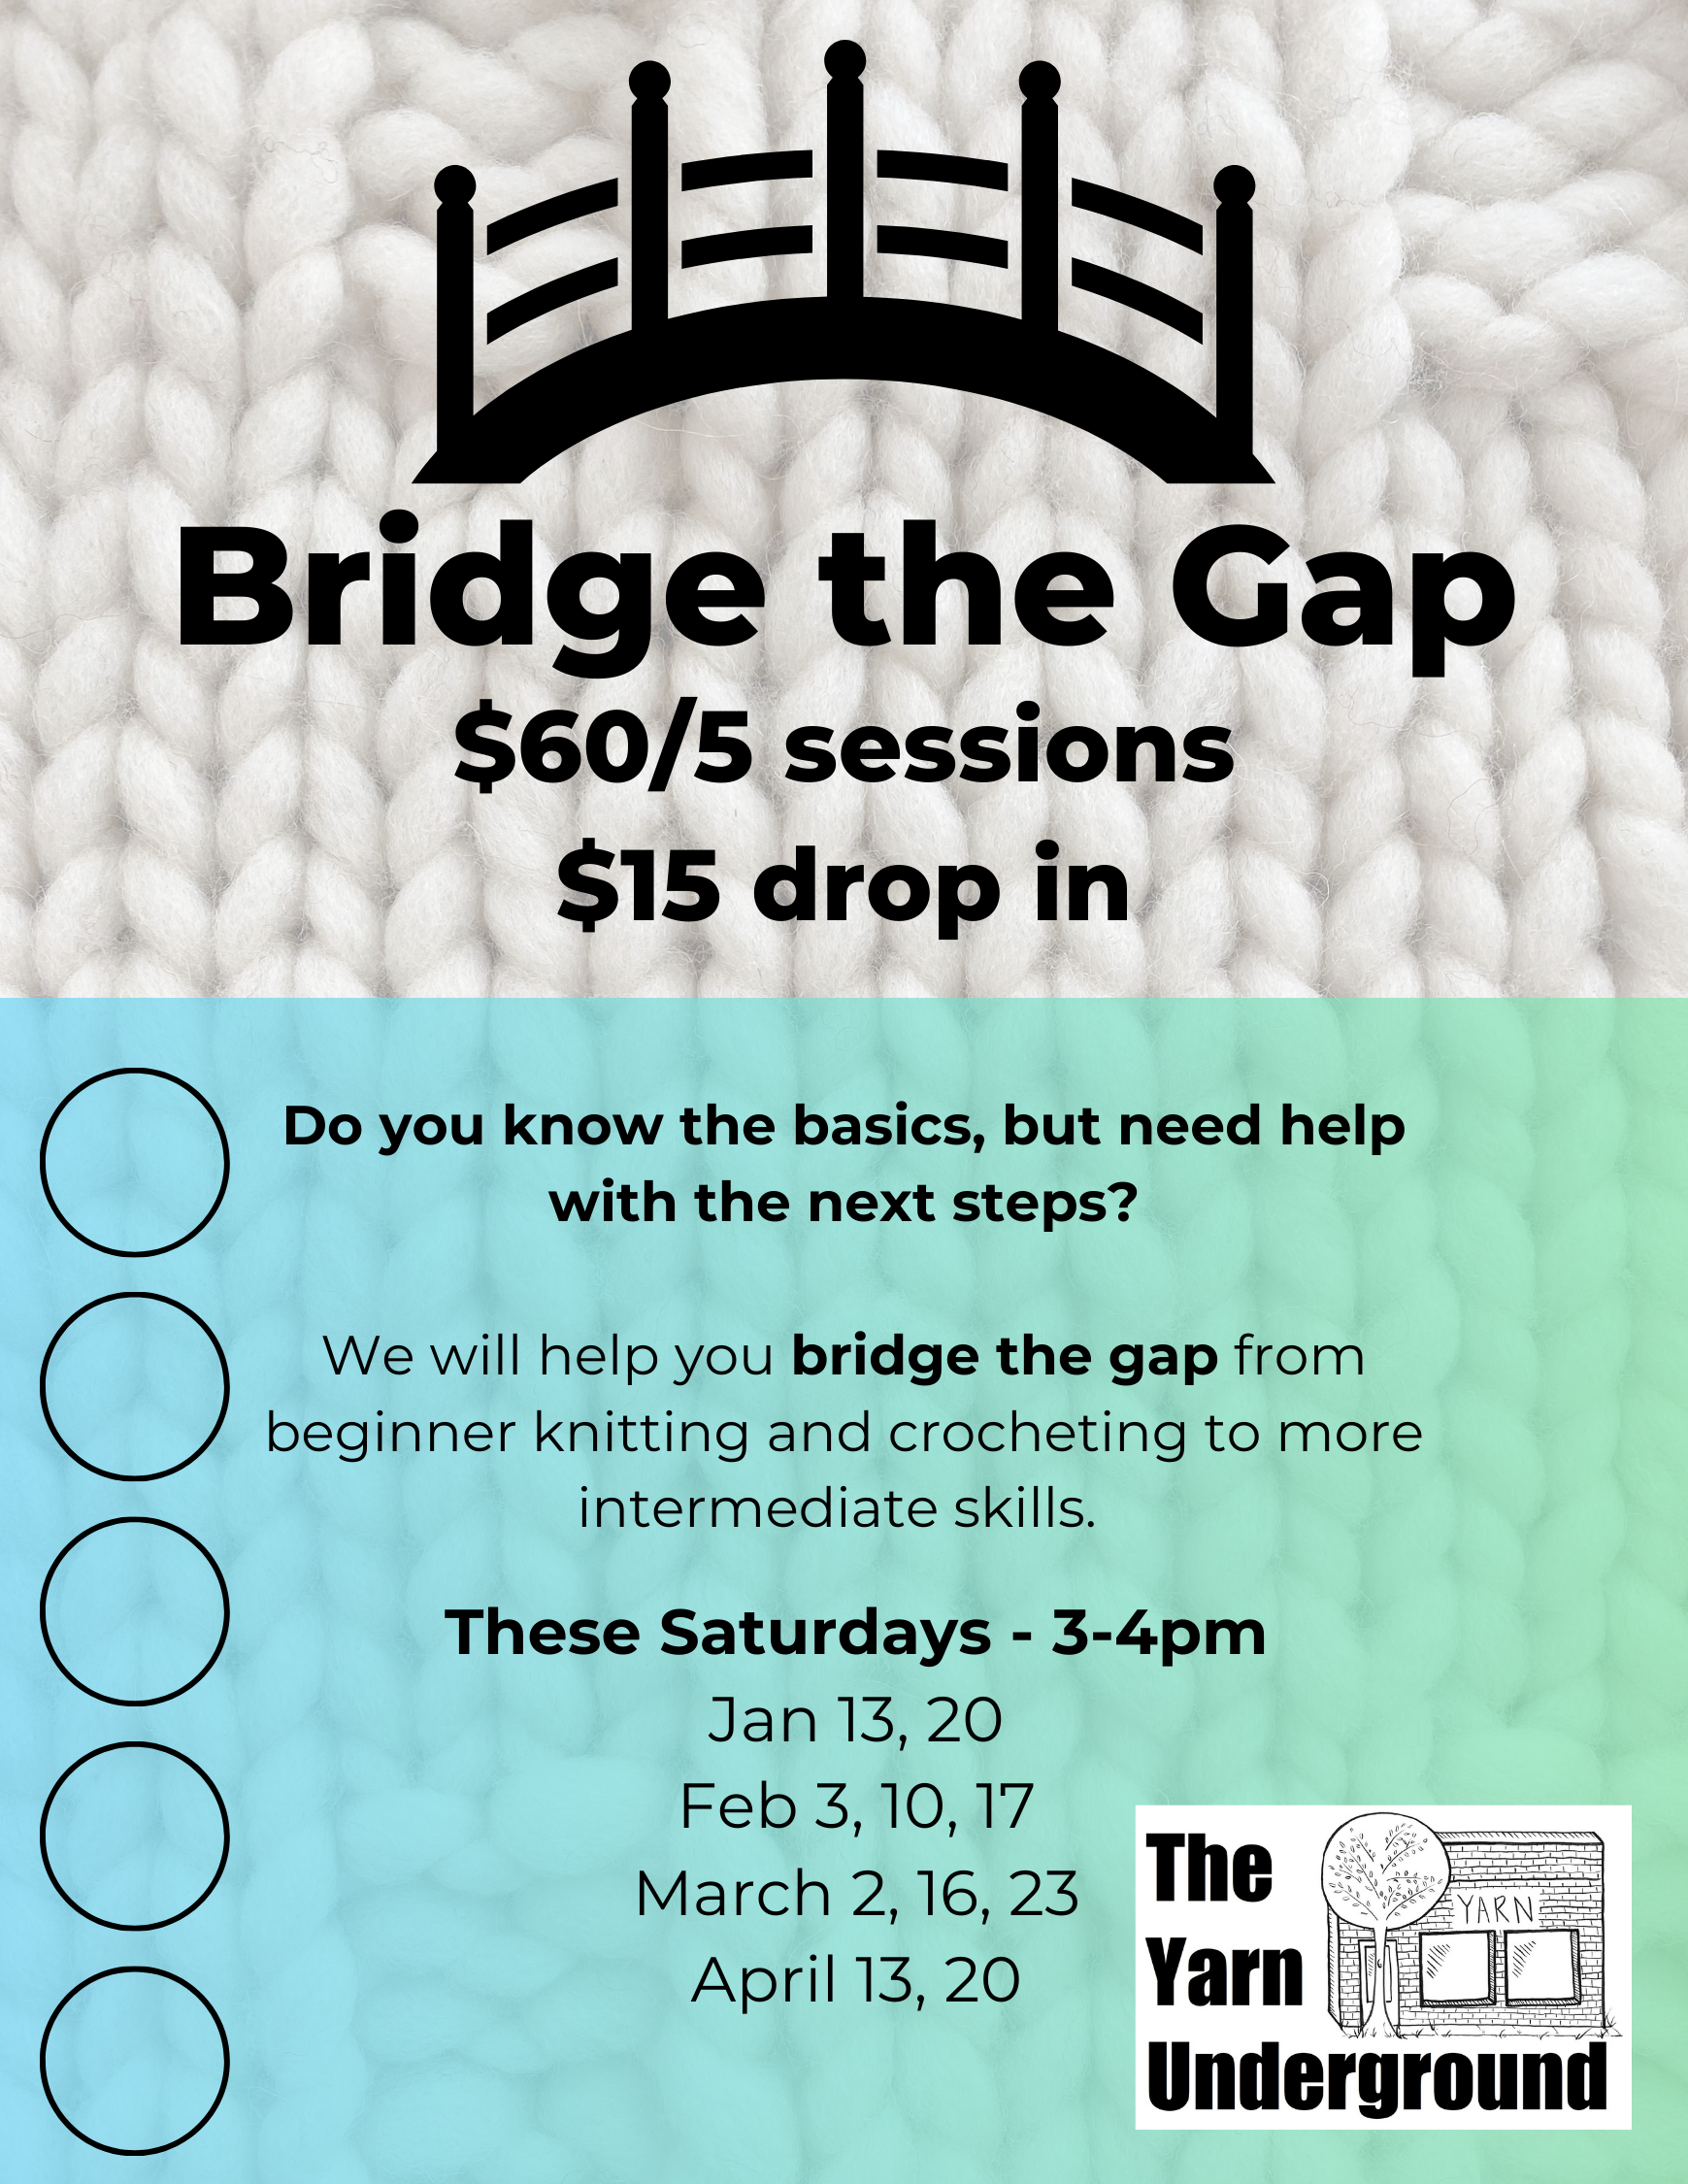 Bridge the Gap - a Knitting and Crochet Workshop